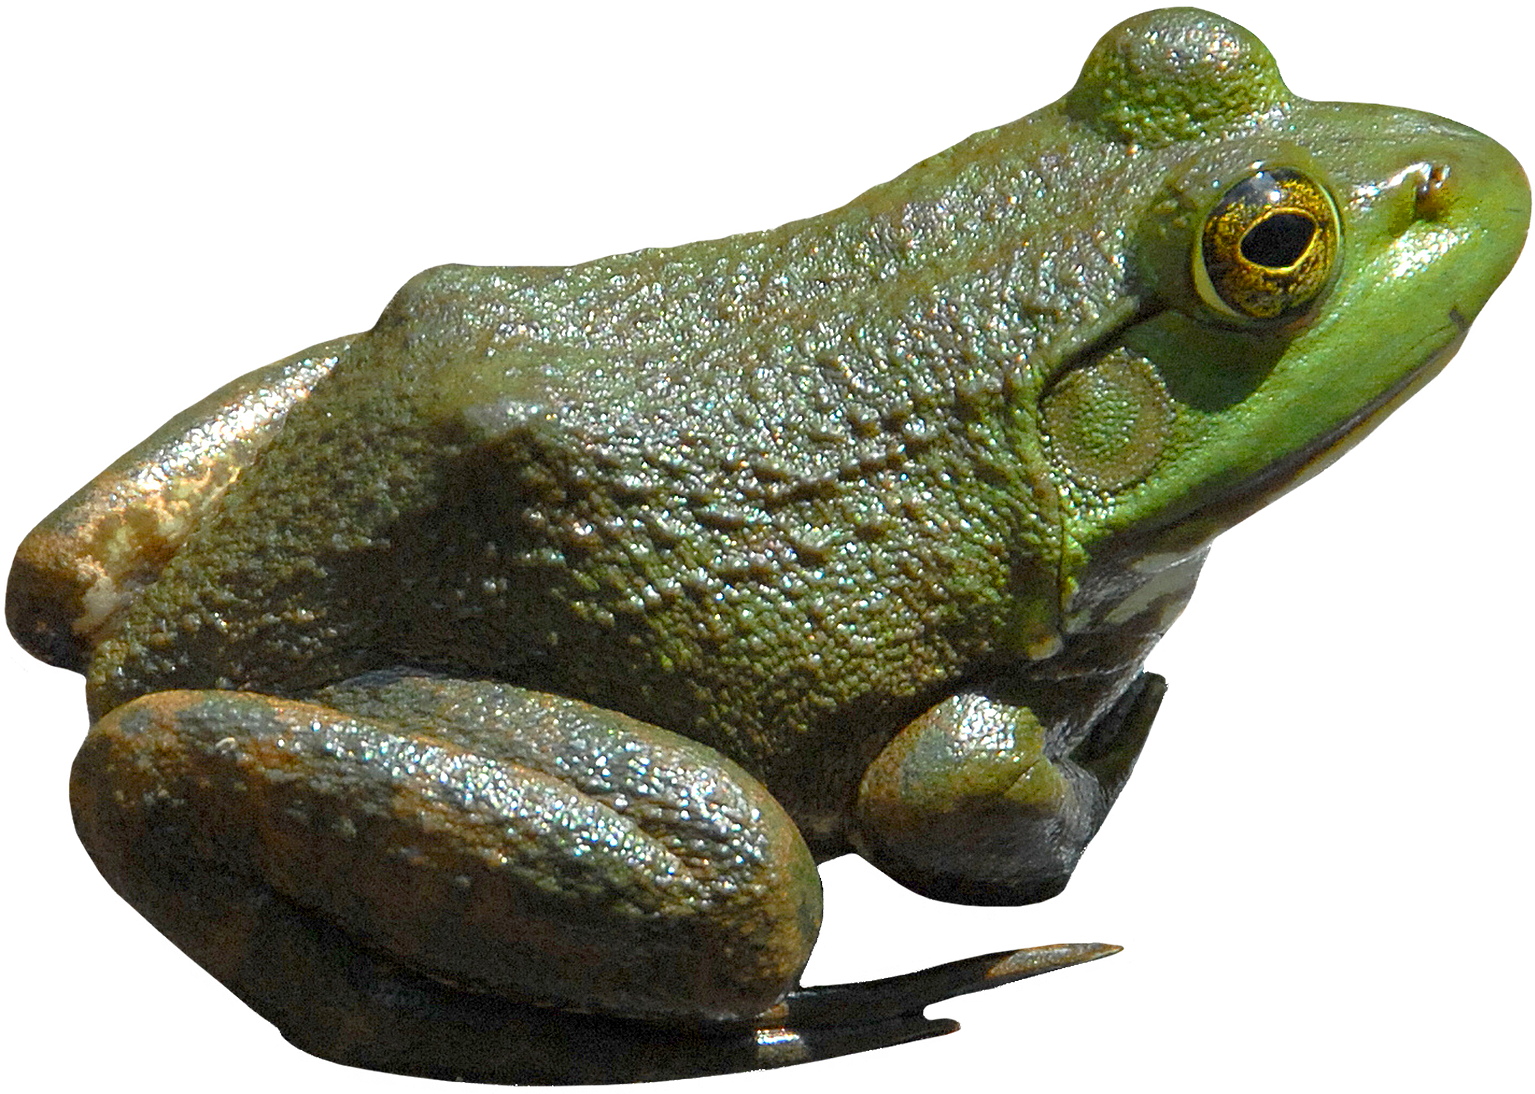 Frog HD PNG image #43139